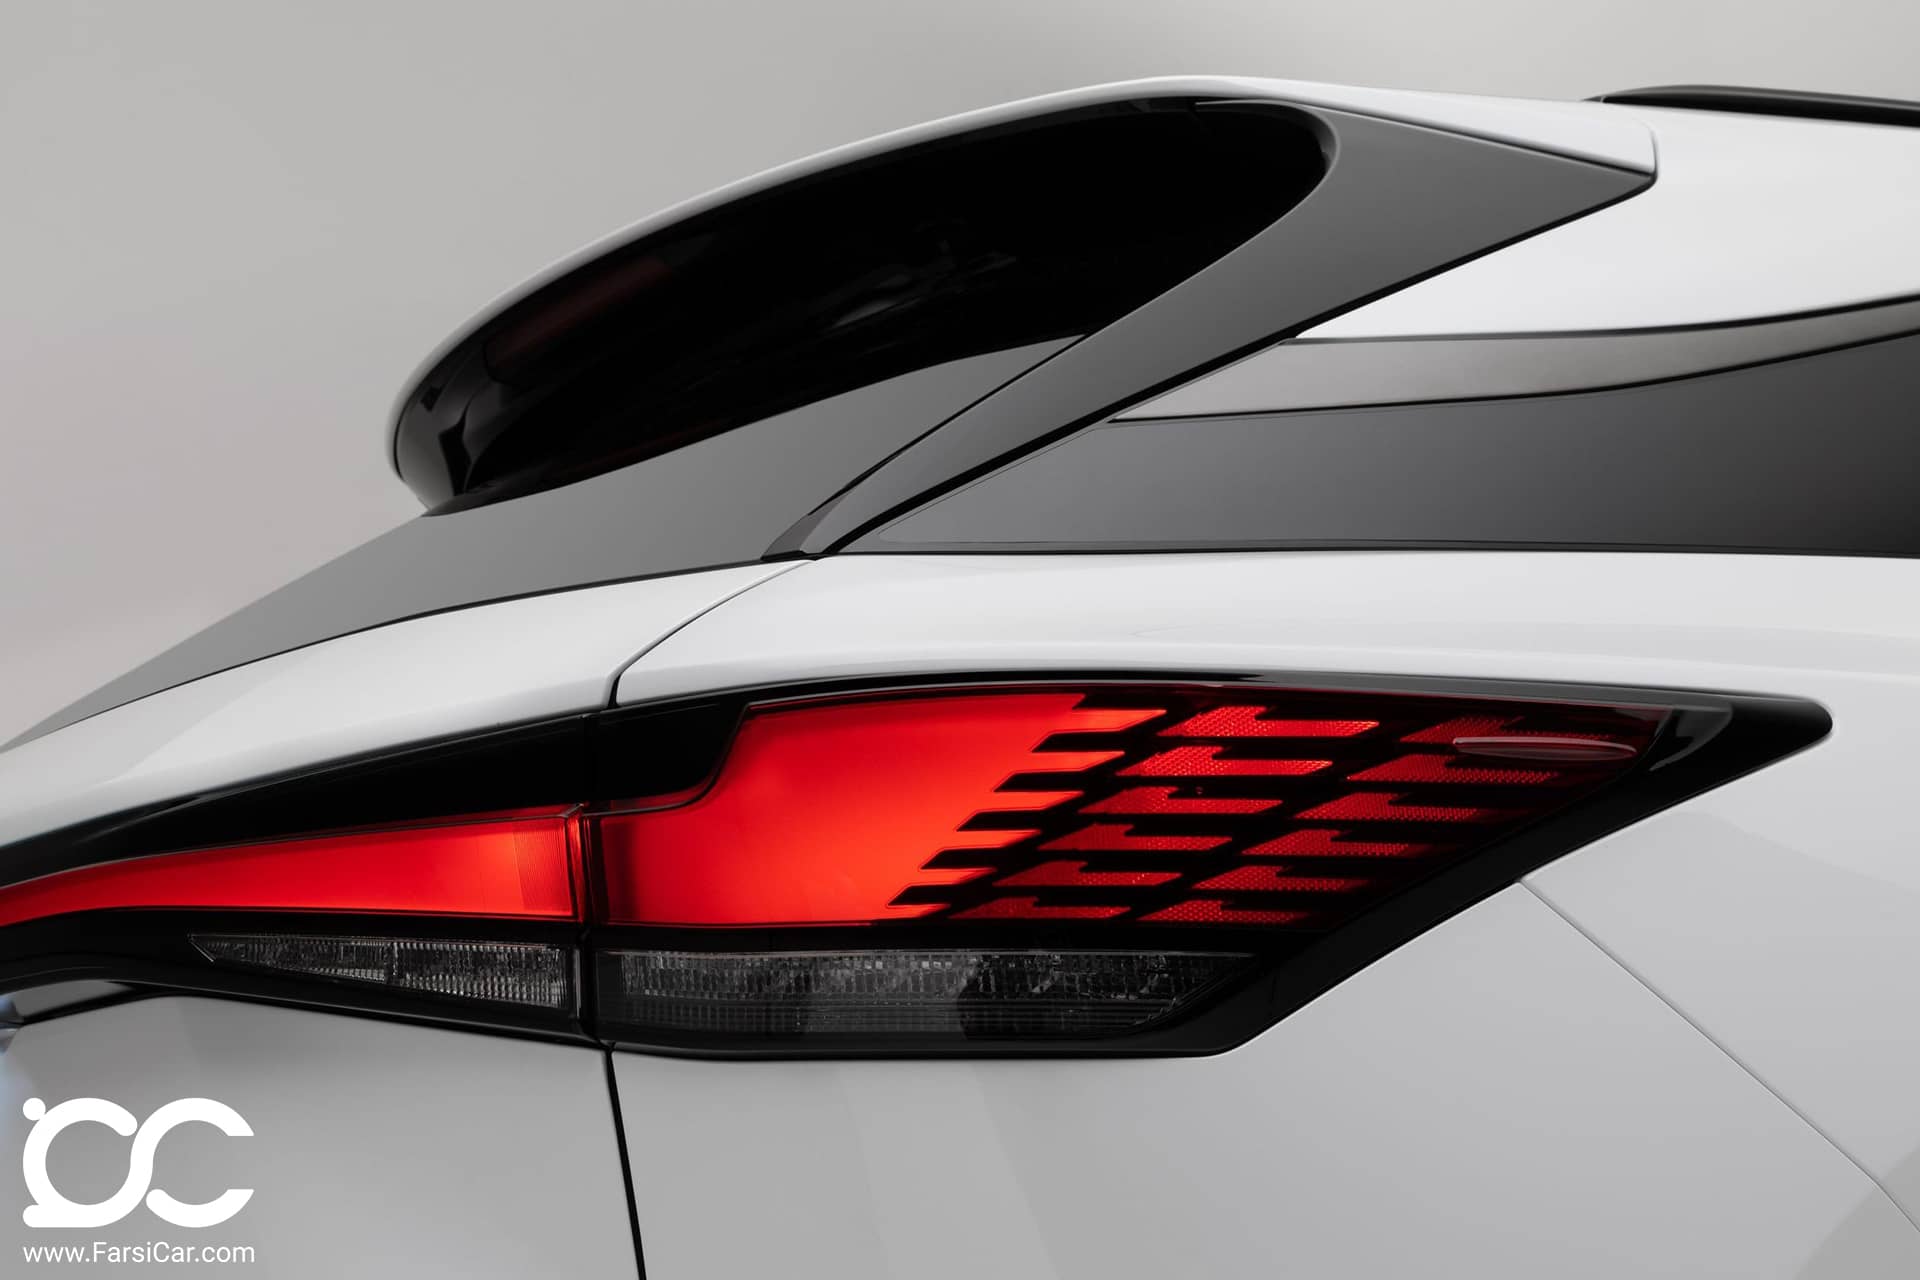 The All-New 2023 Lexus RX Luxury SUV